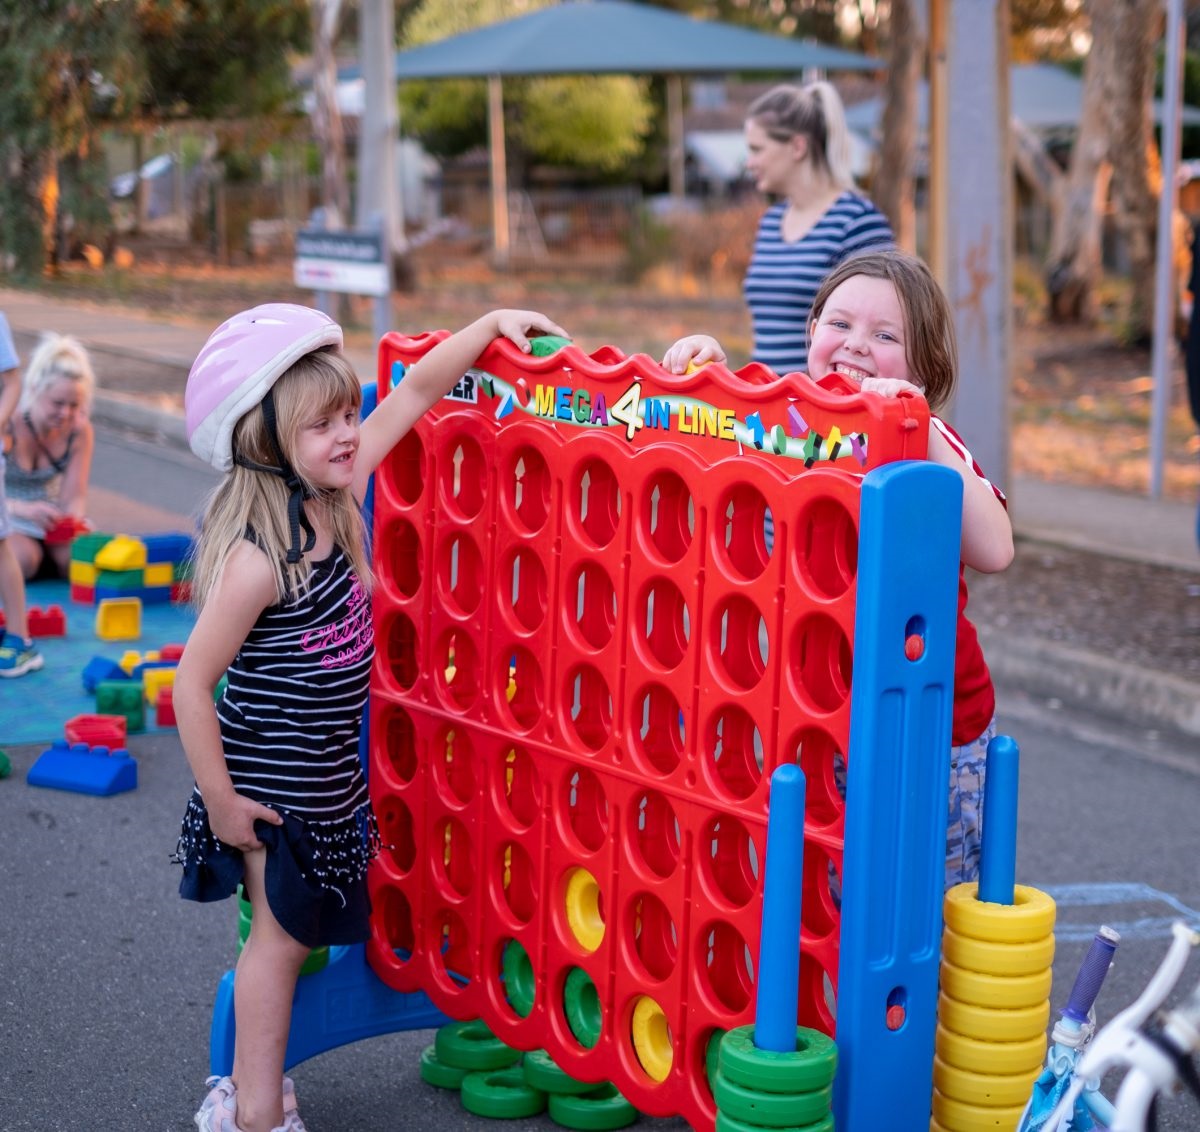 1000 Play Streets program, created by Play Australia